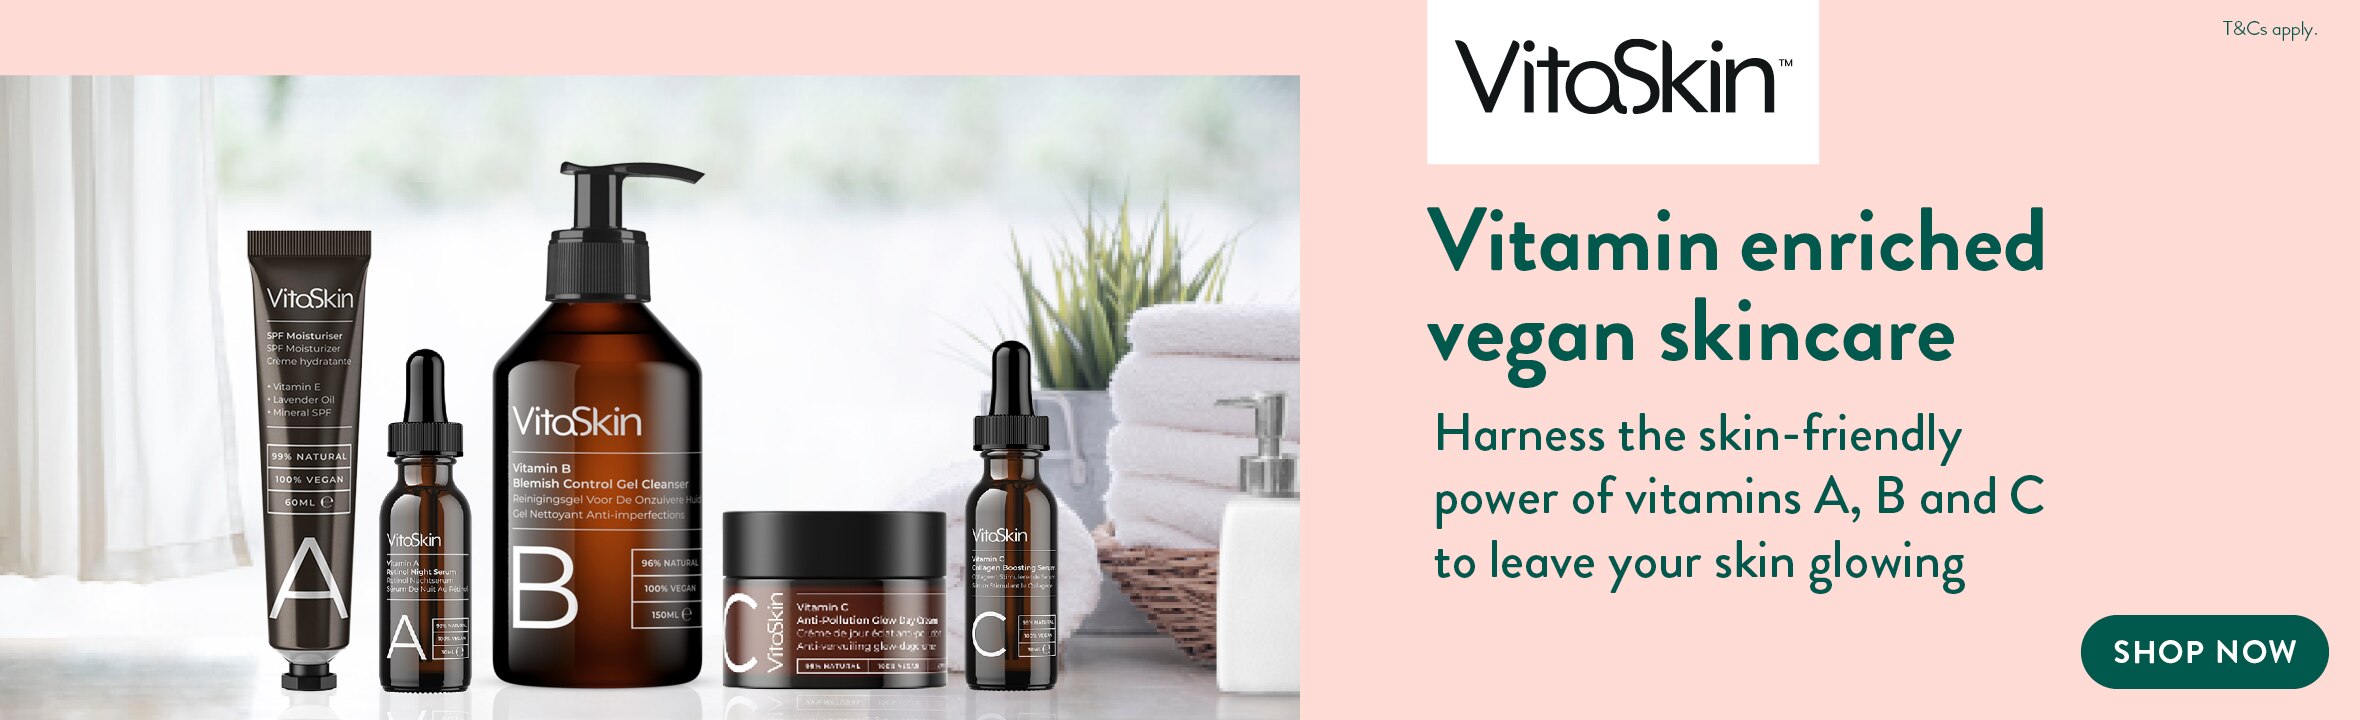 Vitaskin: Vitamin enriched vegan skincare